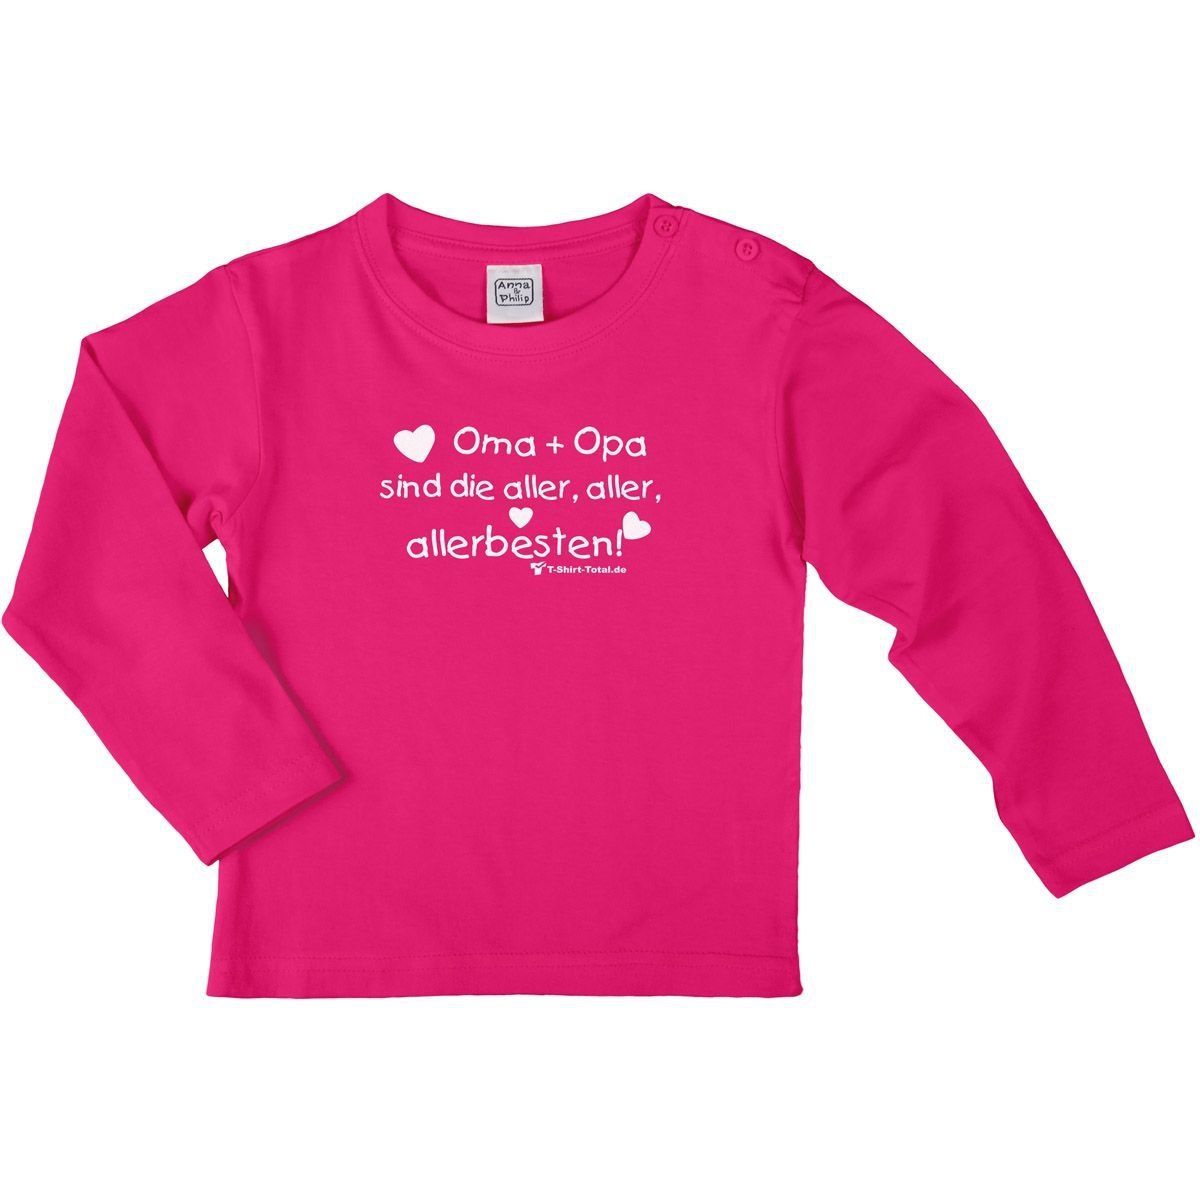 Oma Opa allerbesten Kinder Langarm Shirt pink 56 / 62